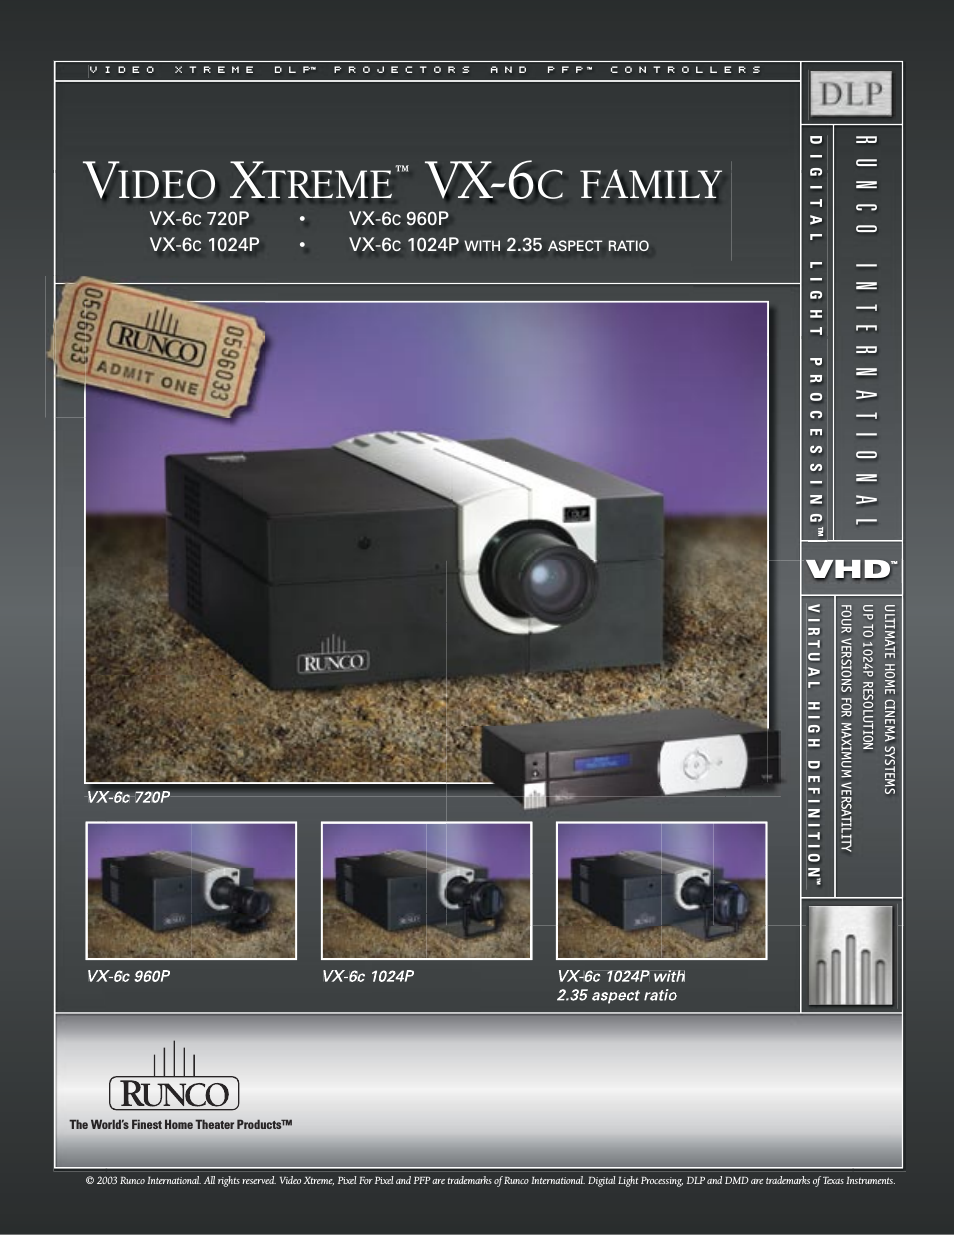 VIDEO XTREME VX-6c 1024P